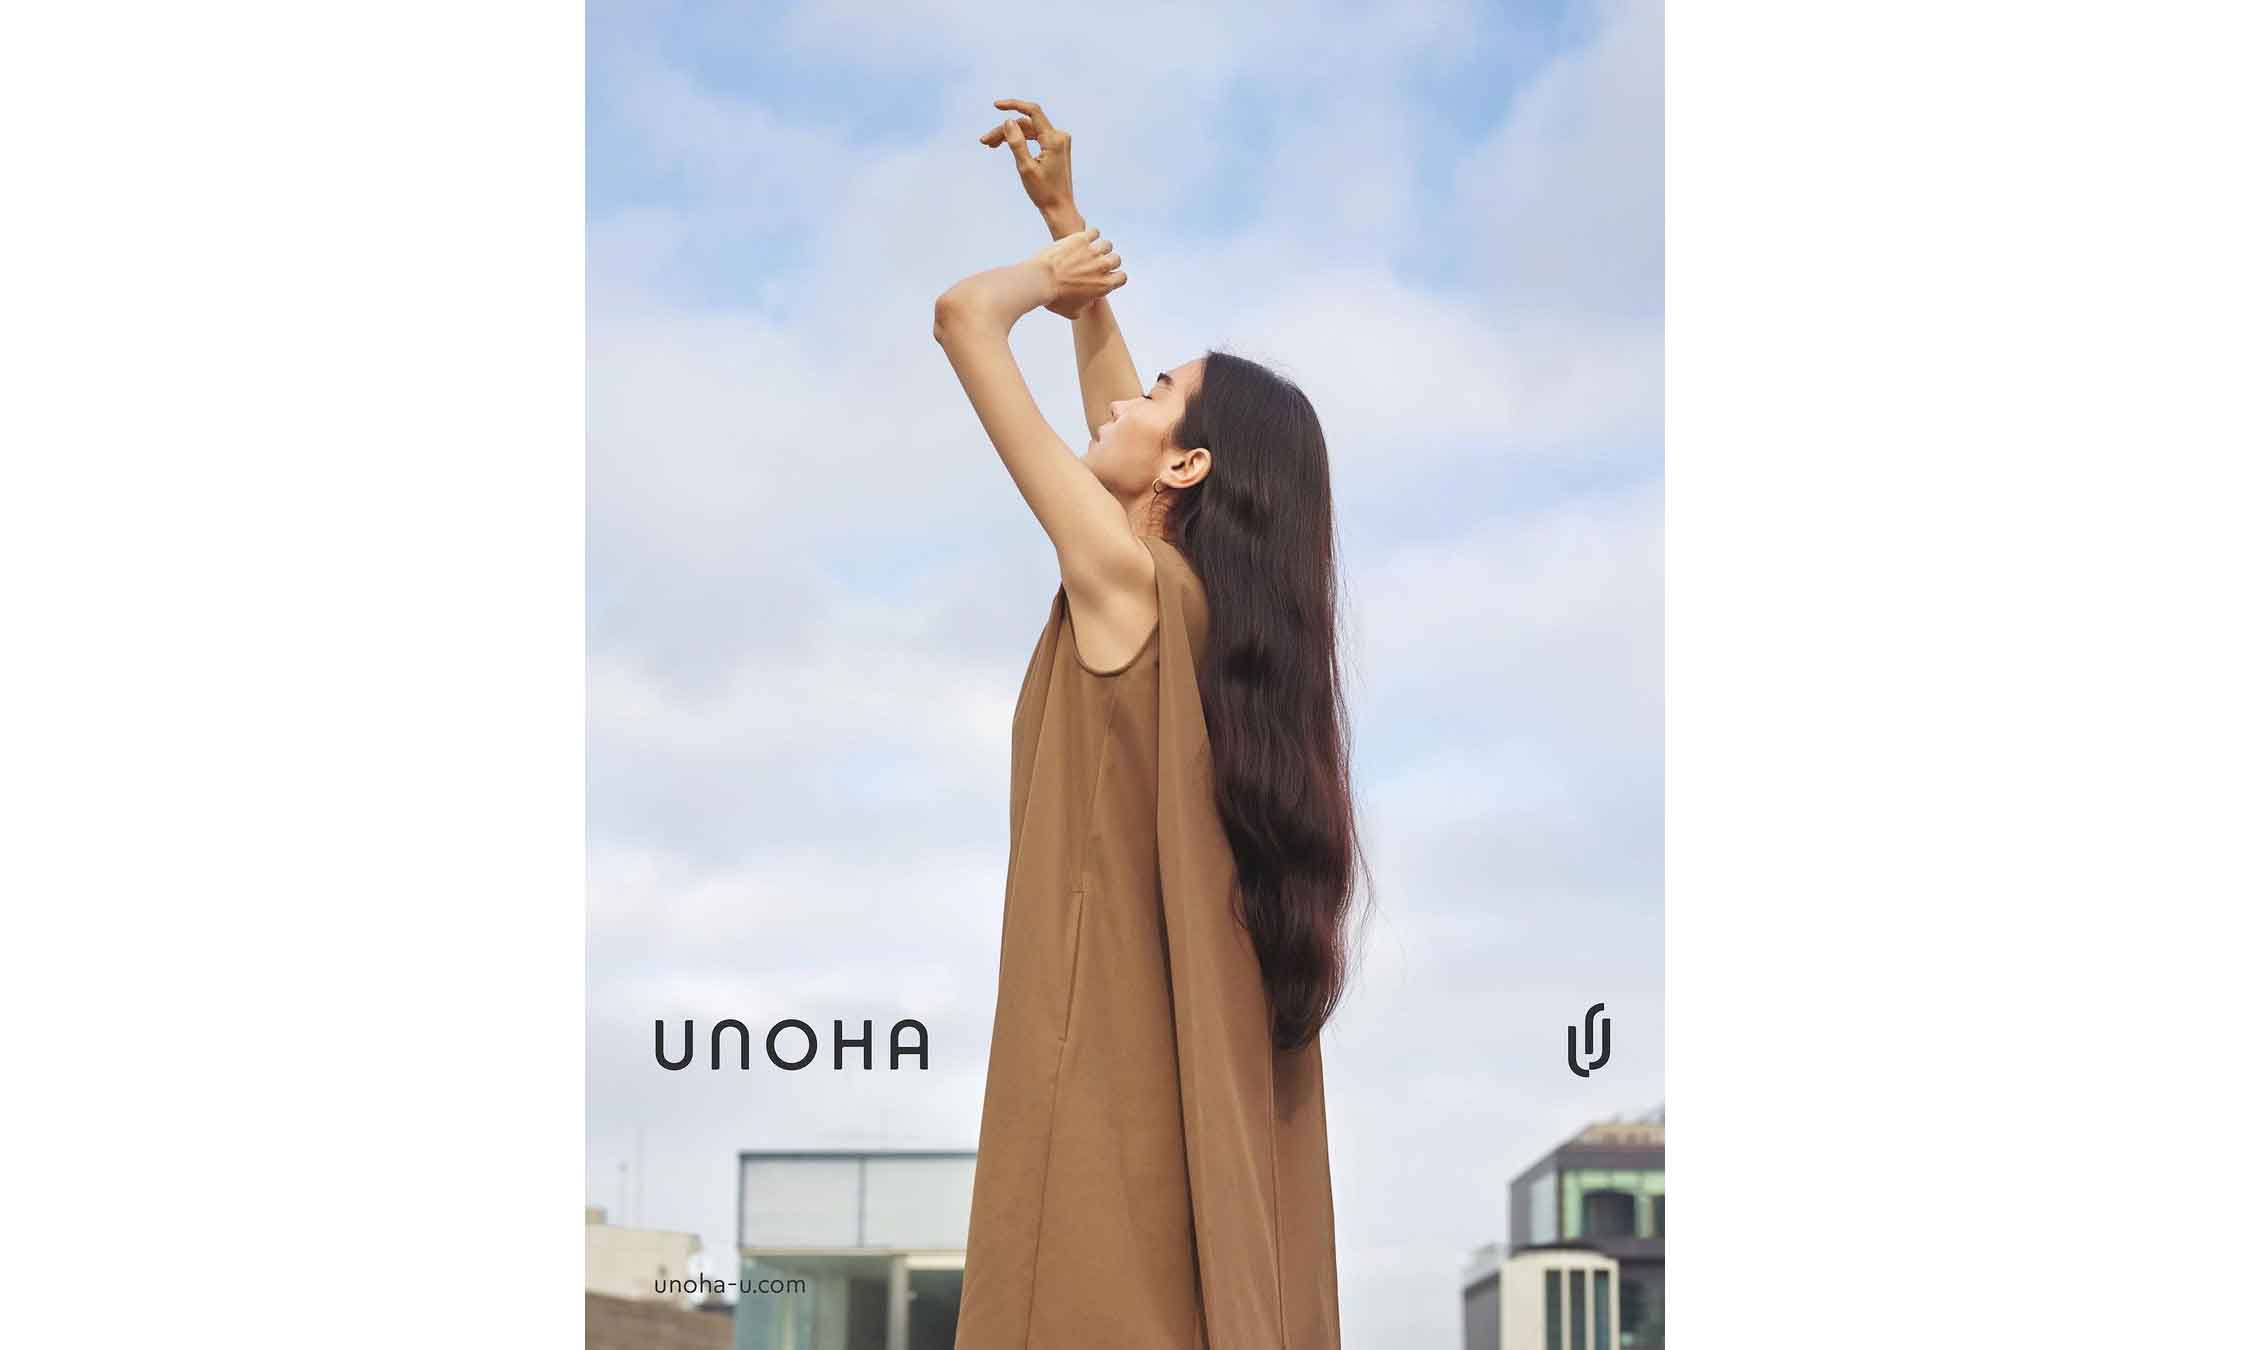 ASICS 推出全新生活方式品牌 UNOHA